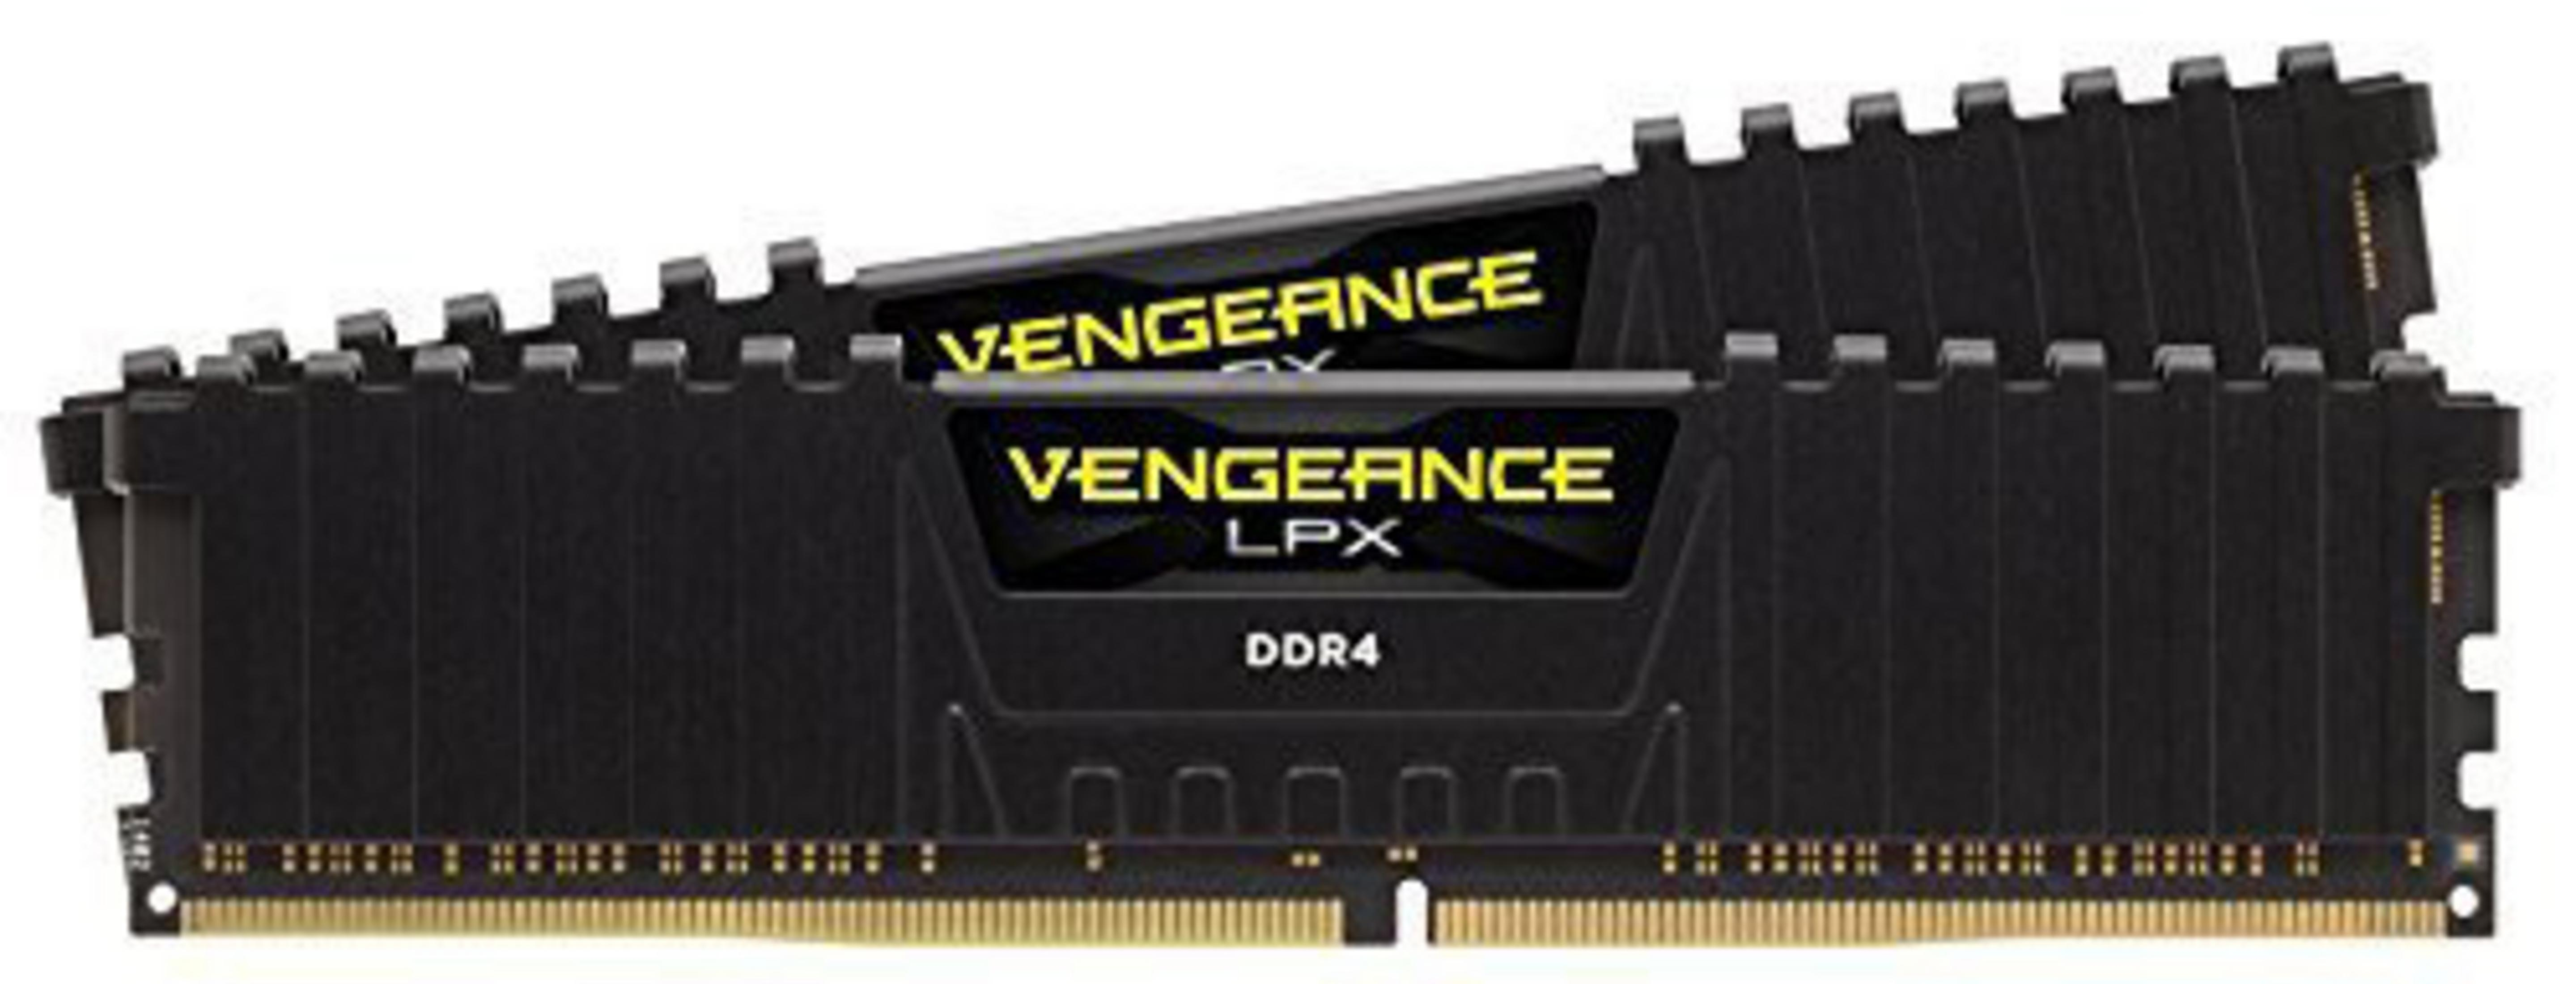 DDR4 GB 288 8 Arbeitsspeicher CMK8GX4M1A2666 PIN VENGEANCE CORSAIR LPX 8GB DIMM DDR4